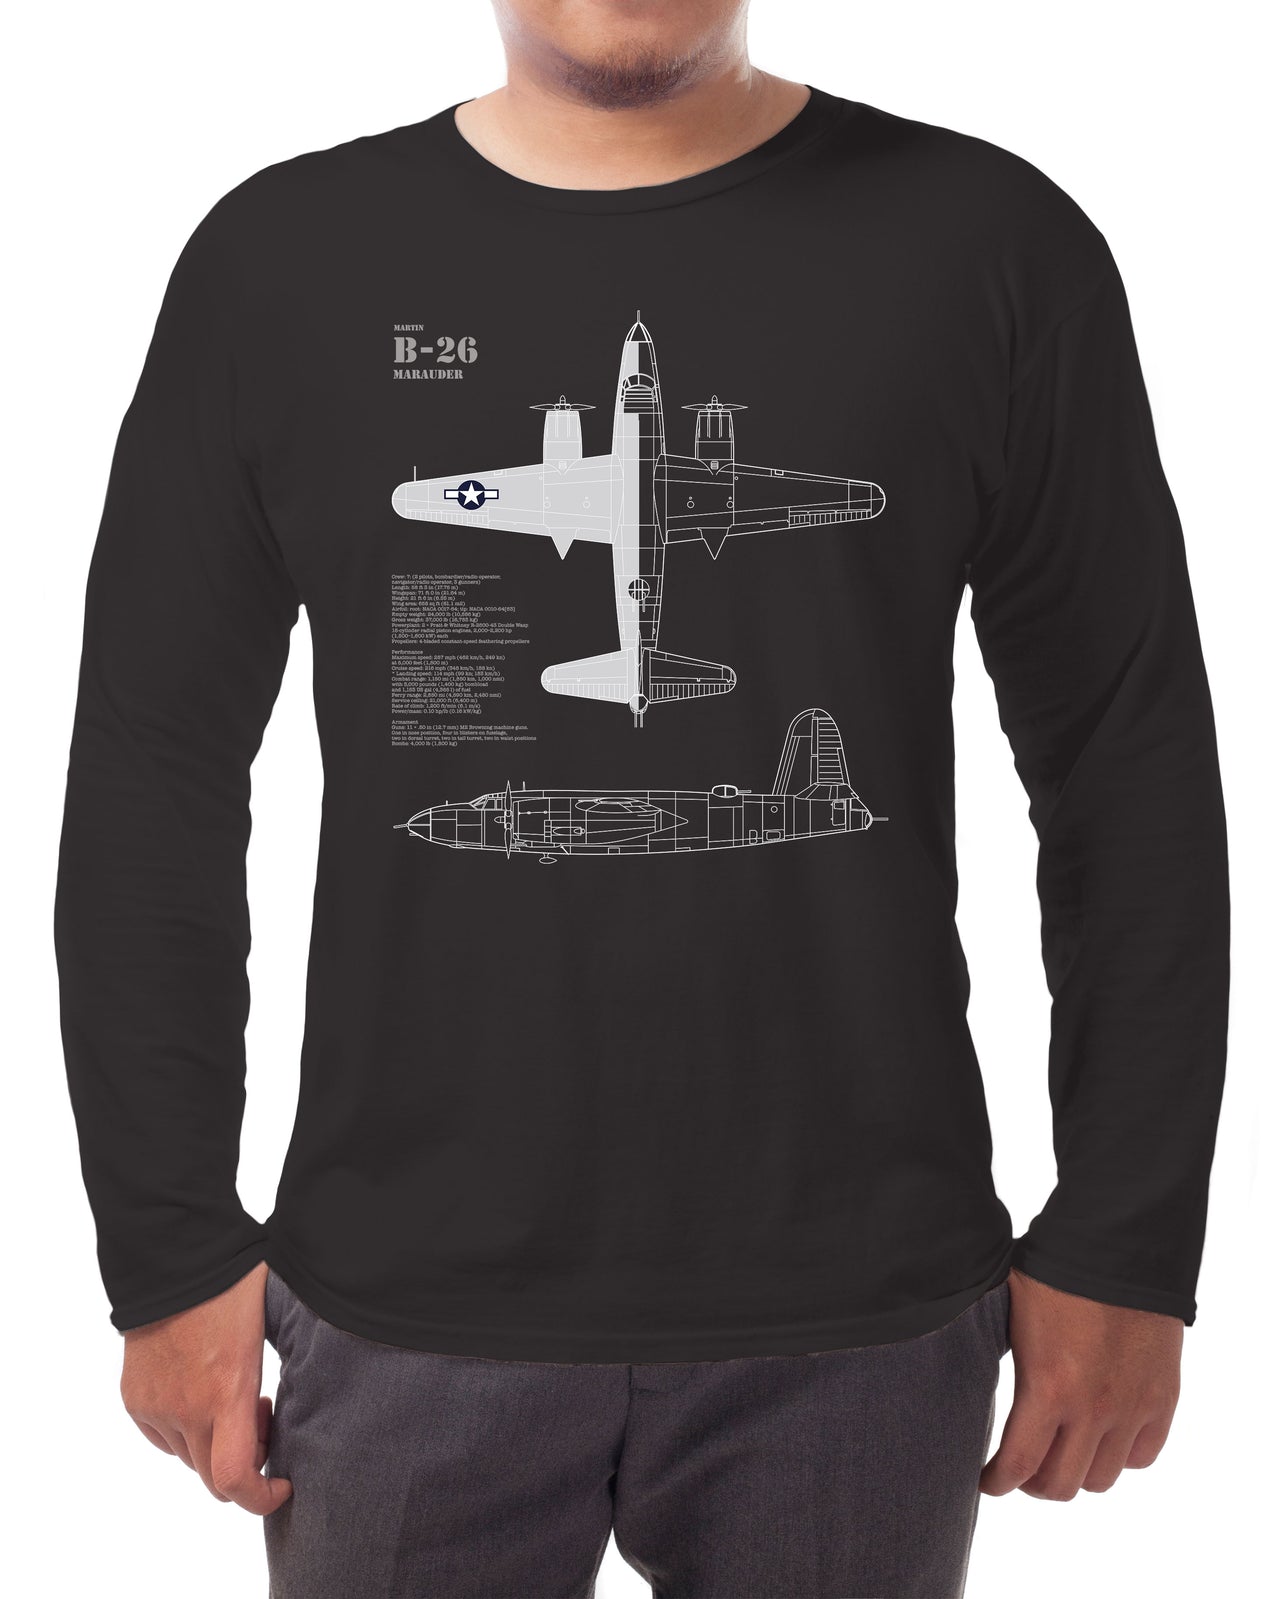 B-26 Marauder - Long-sleeve T-shirt